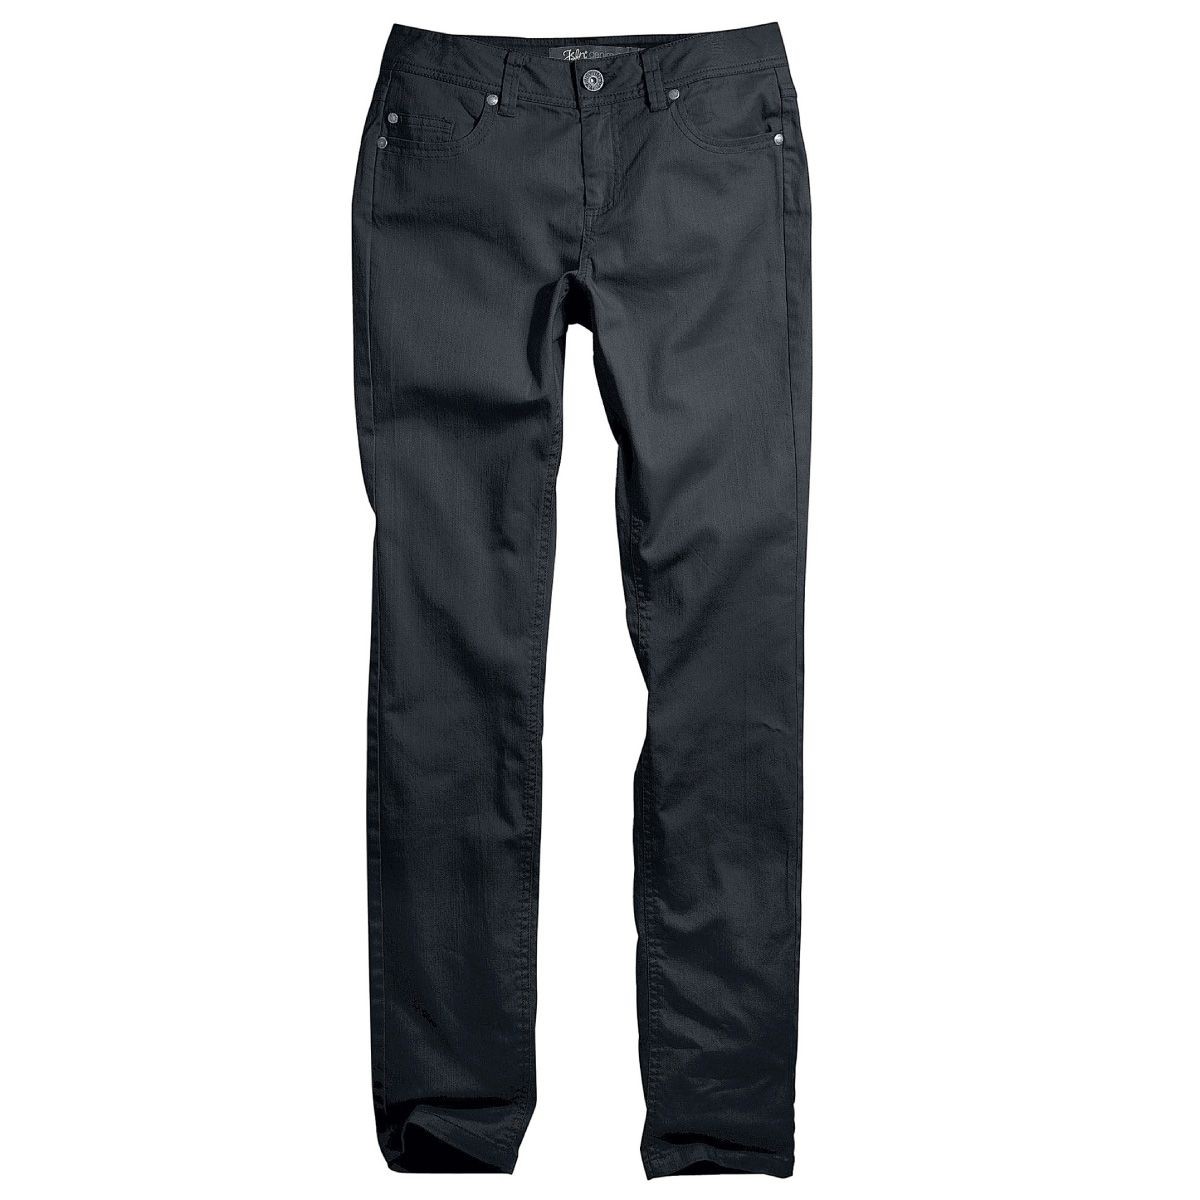 Slim tramo jeans 82 centímetros de lonxitude, 6 cores